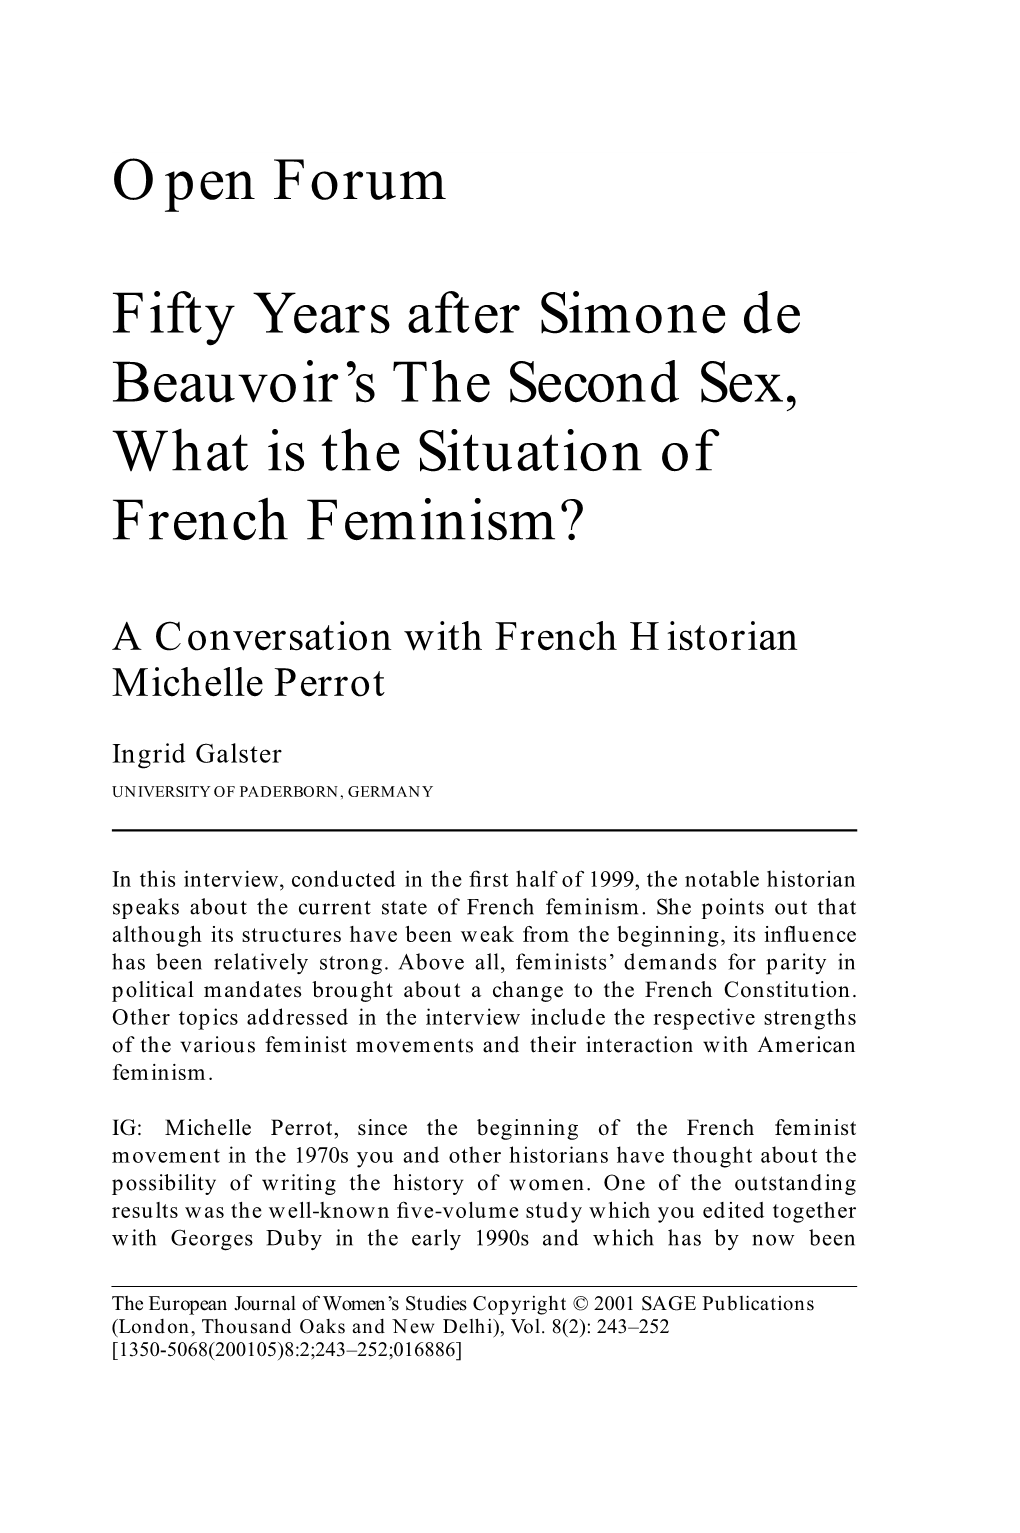 Open Forum Fifty Years After Simone De Beauvoir's the Second Sex